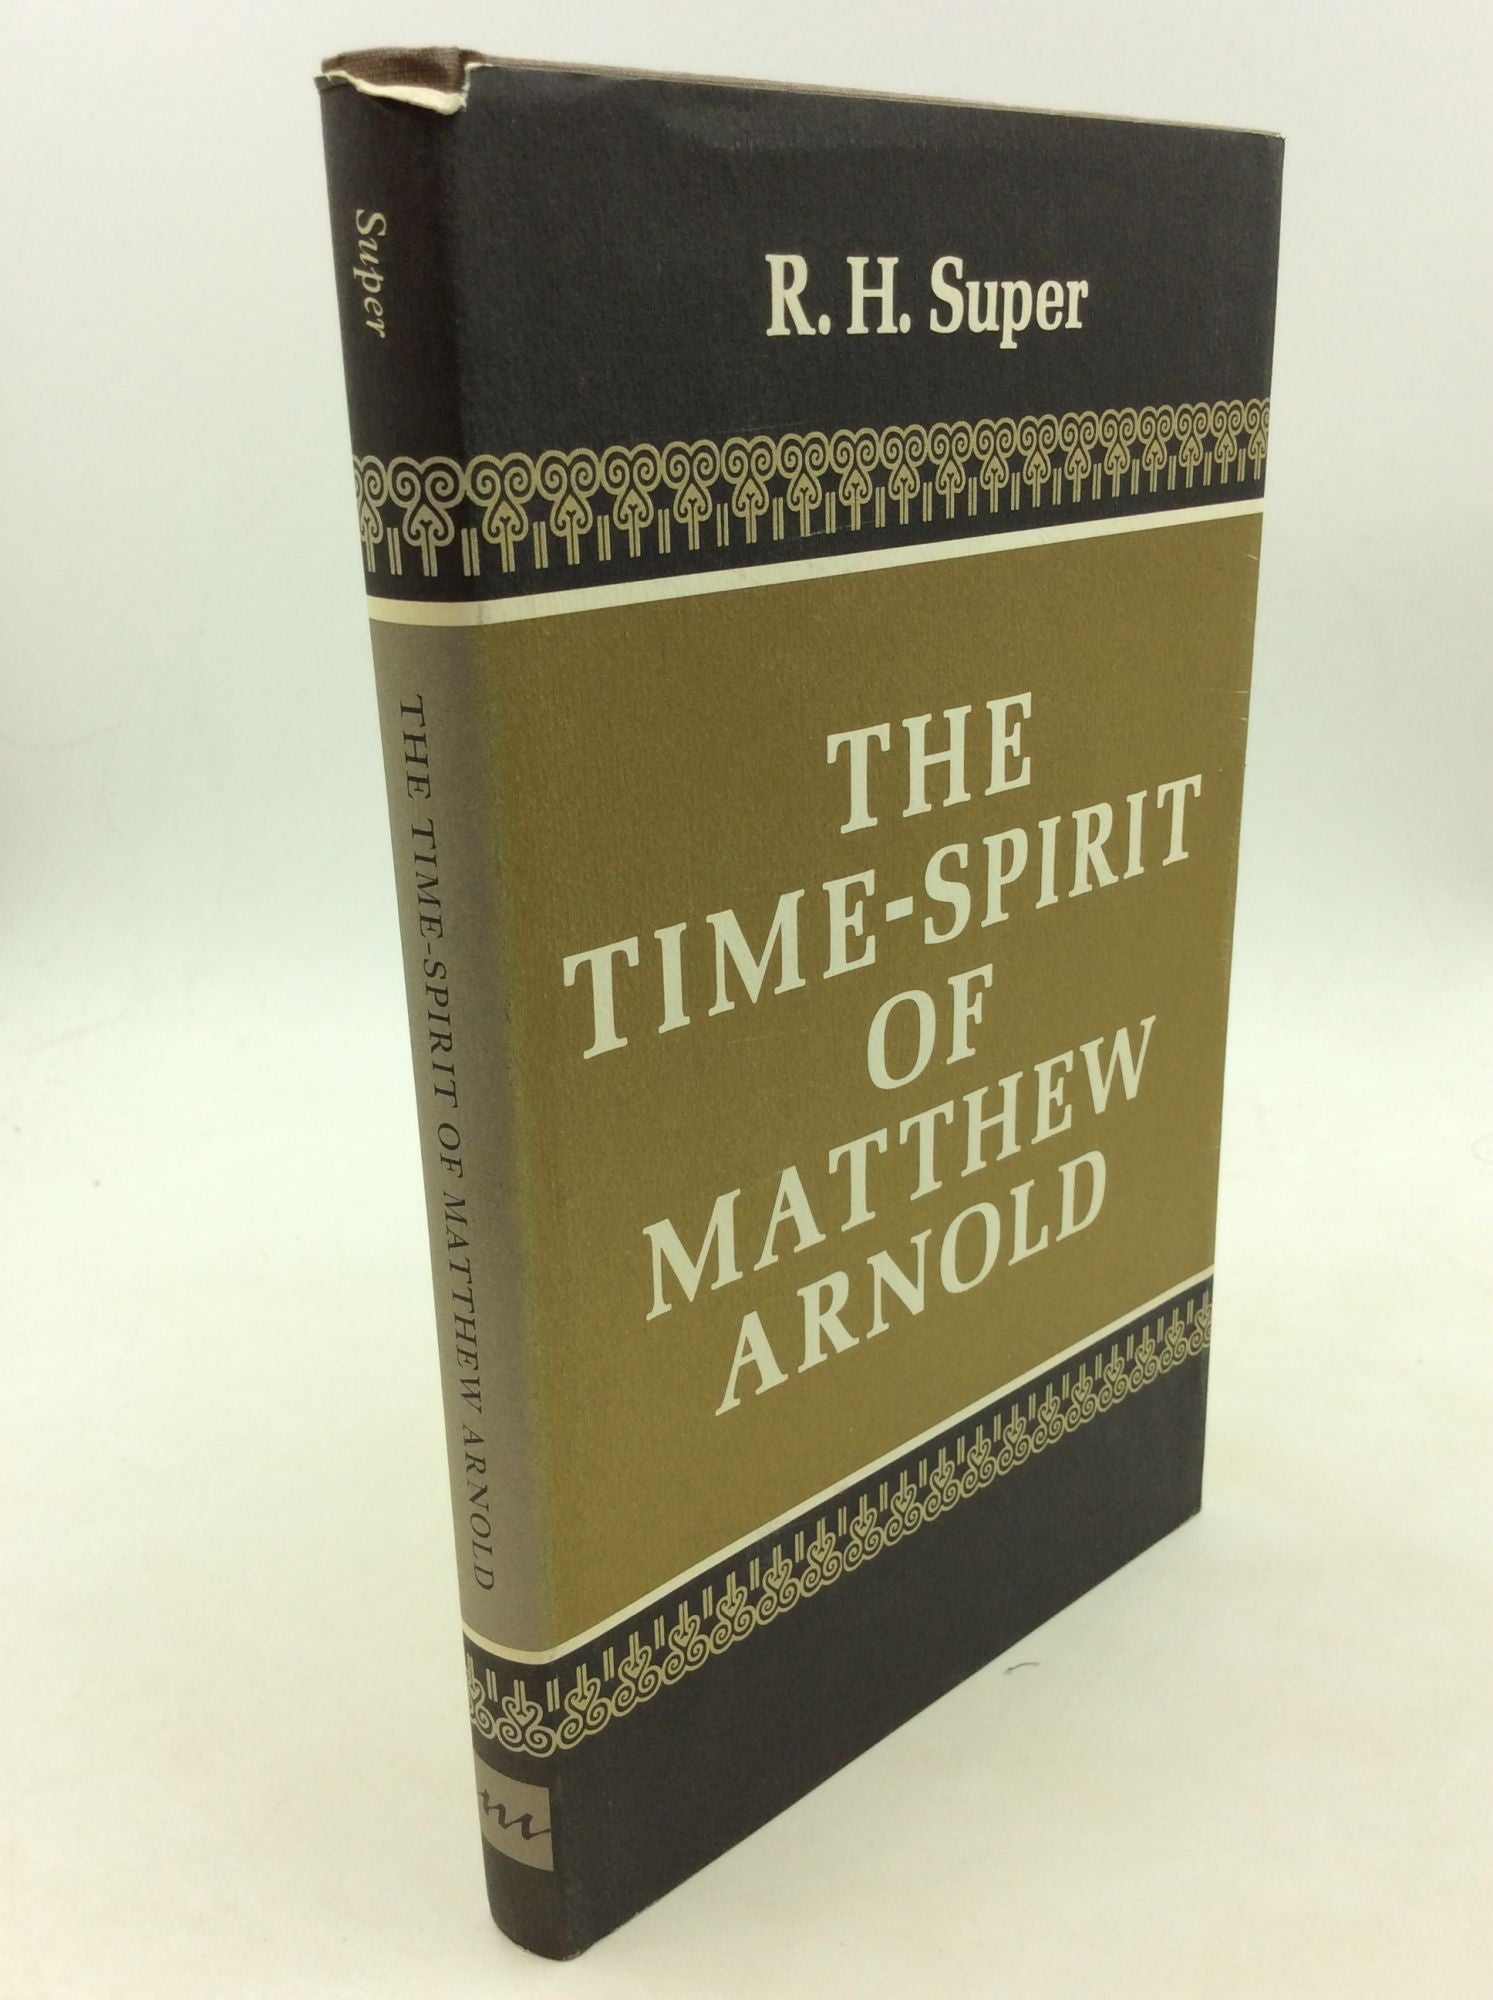 R.H. Super - The Time-Spirit of Matthew Arnold